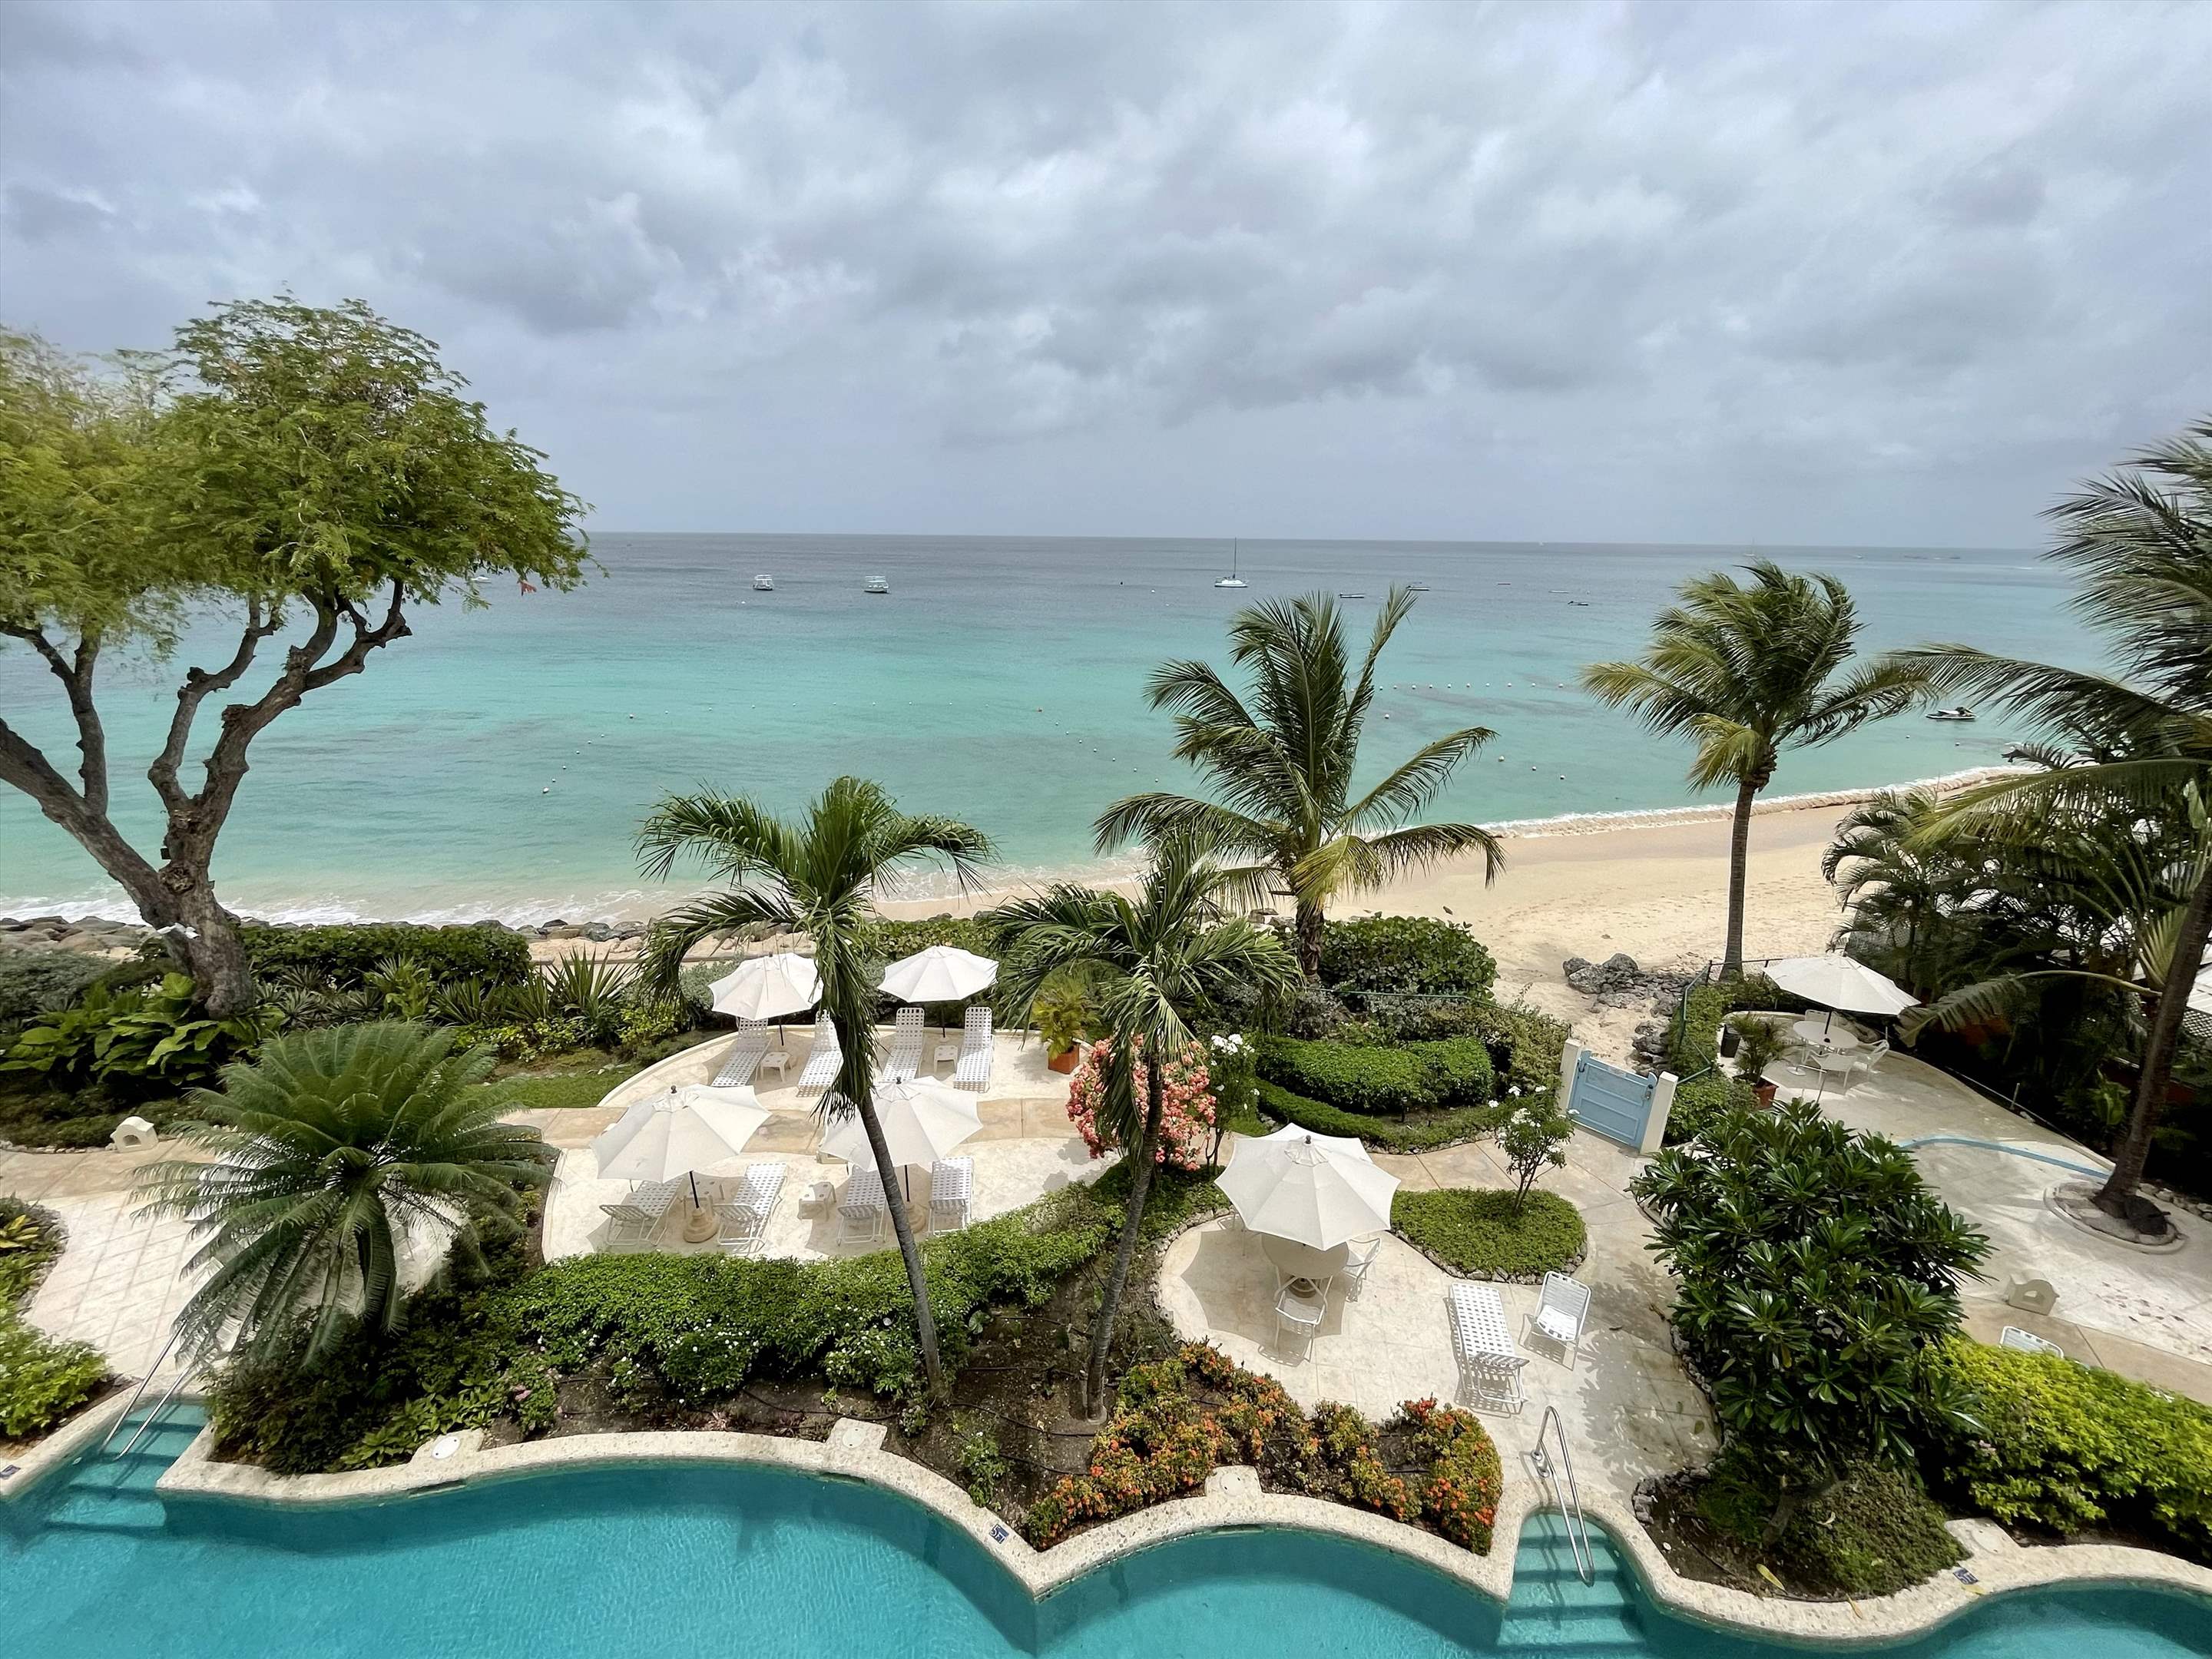 Villas on the Beach 403, 2 bedroom, 2 bedroom apartment in St. James & West Coast, Barbados Photo #1